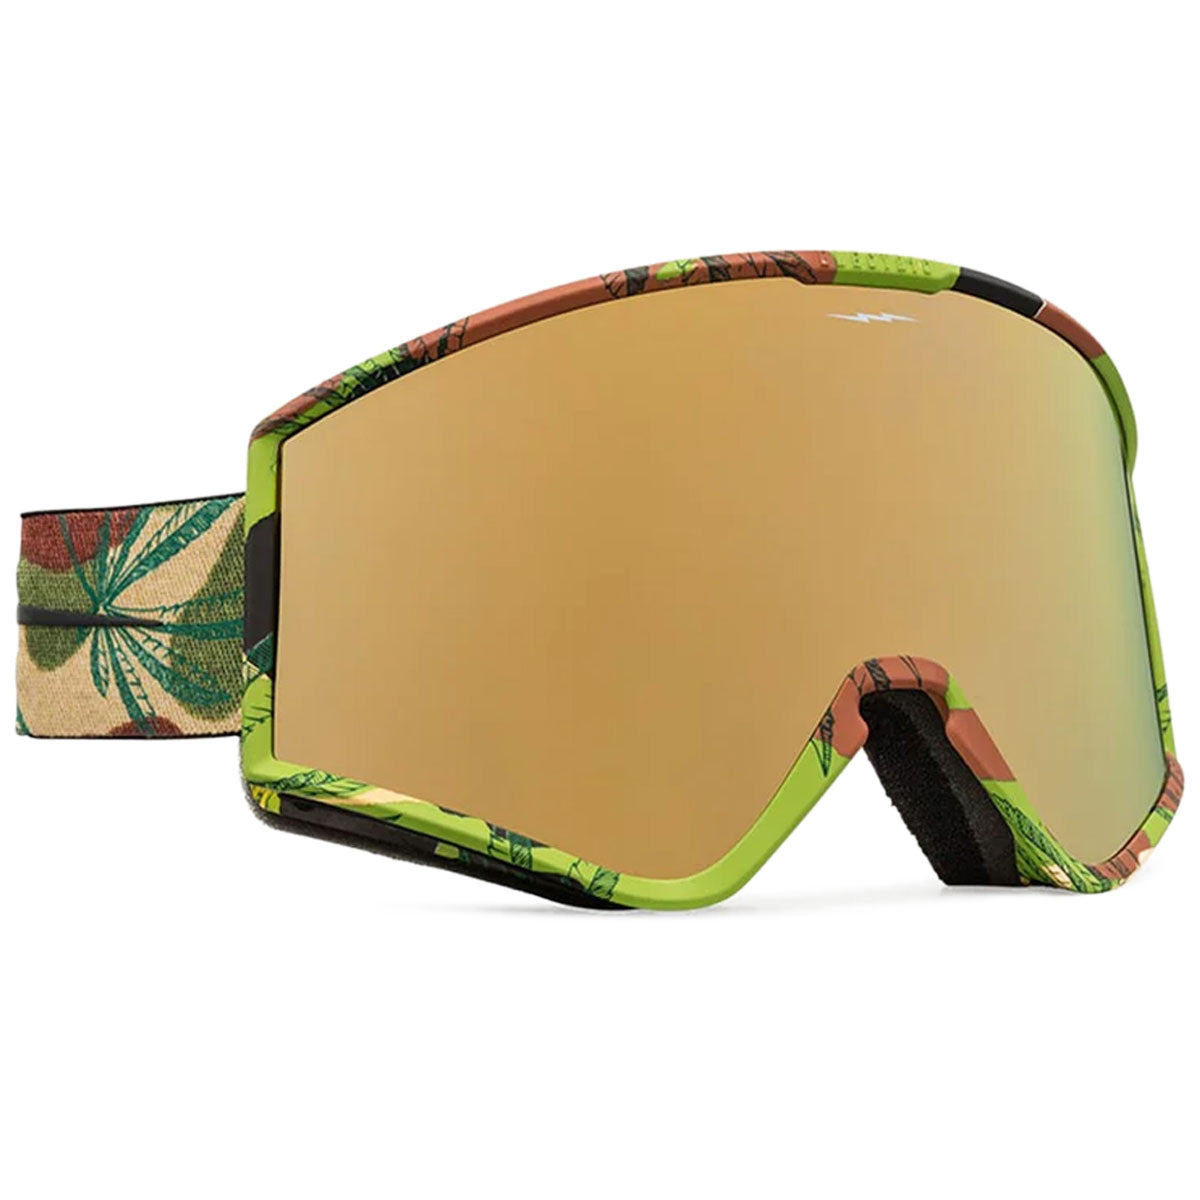 Electric Kleveland Snowboard Goggles - Matte Camobis/Gold Chrome image 1